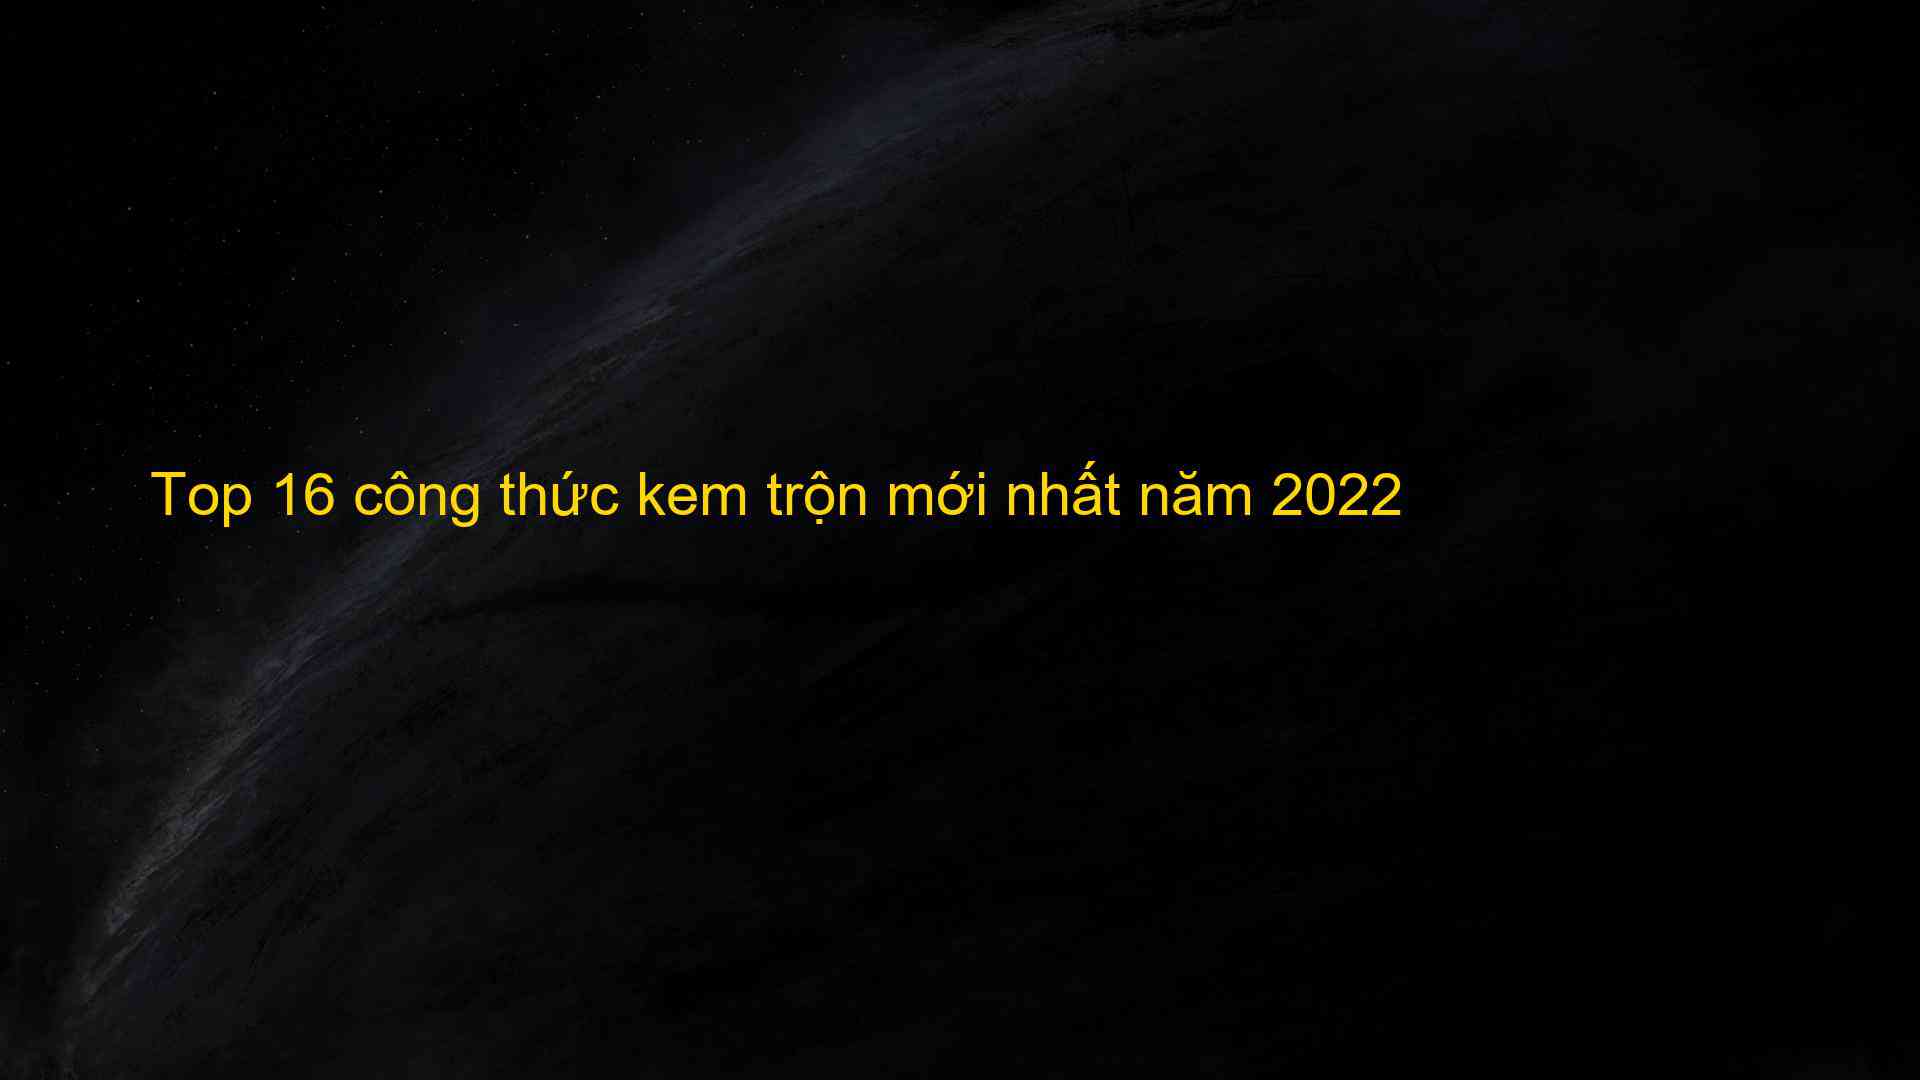 Top 16 cong thuc kem tron moi nhat nam 2022 1659712892